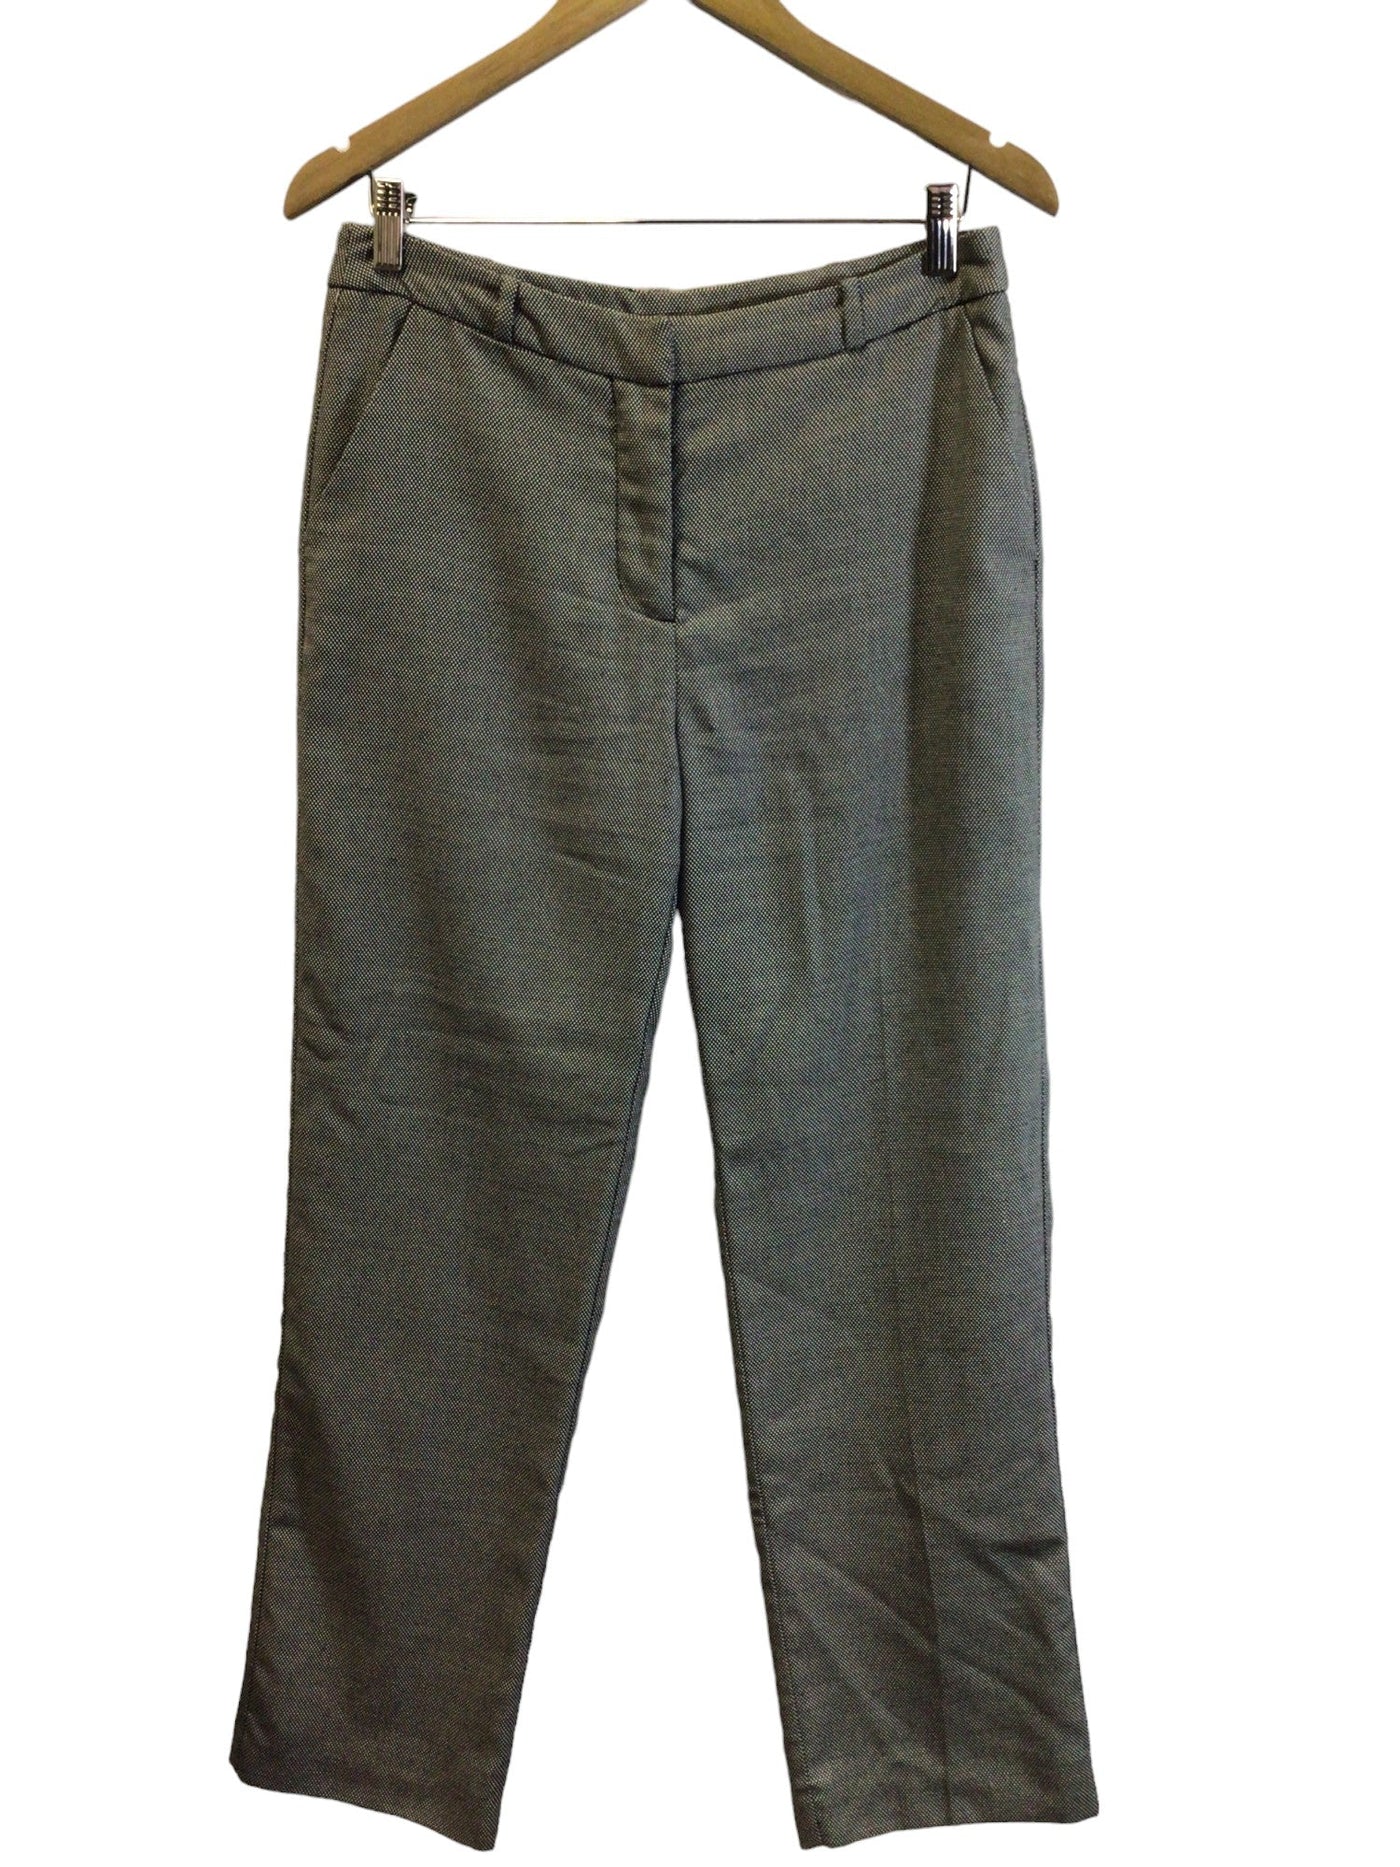 TRADITION Women Work Pants Regular fit in Black - Size 6 | 15 $ KOOP